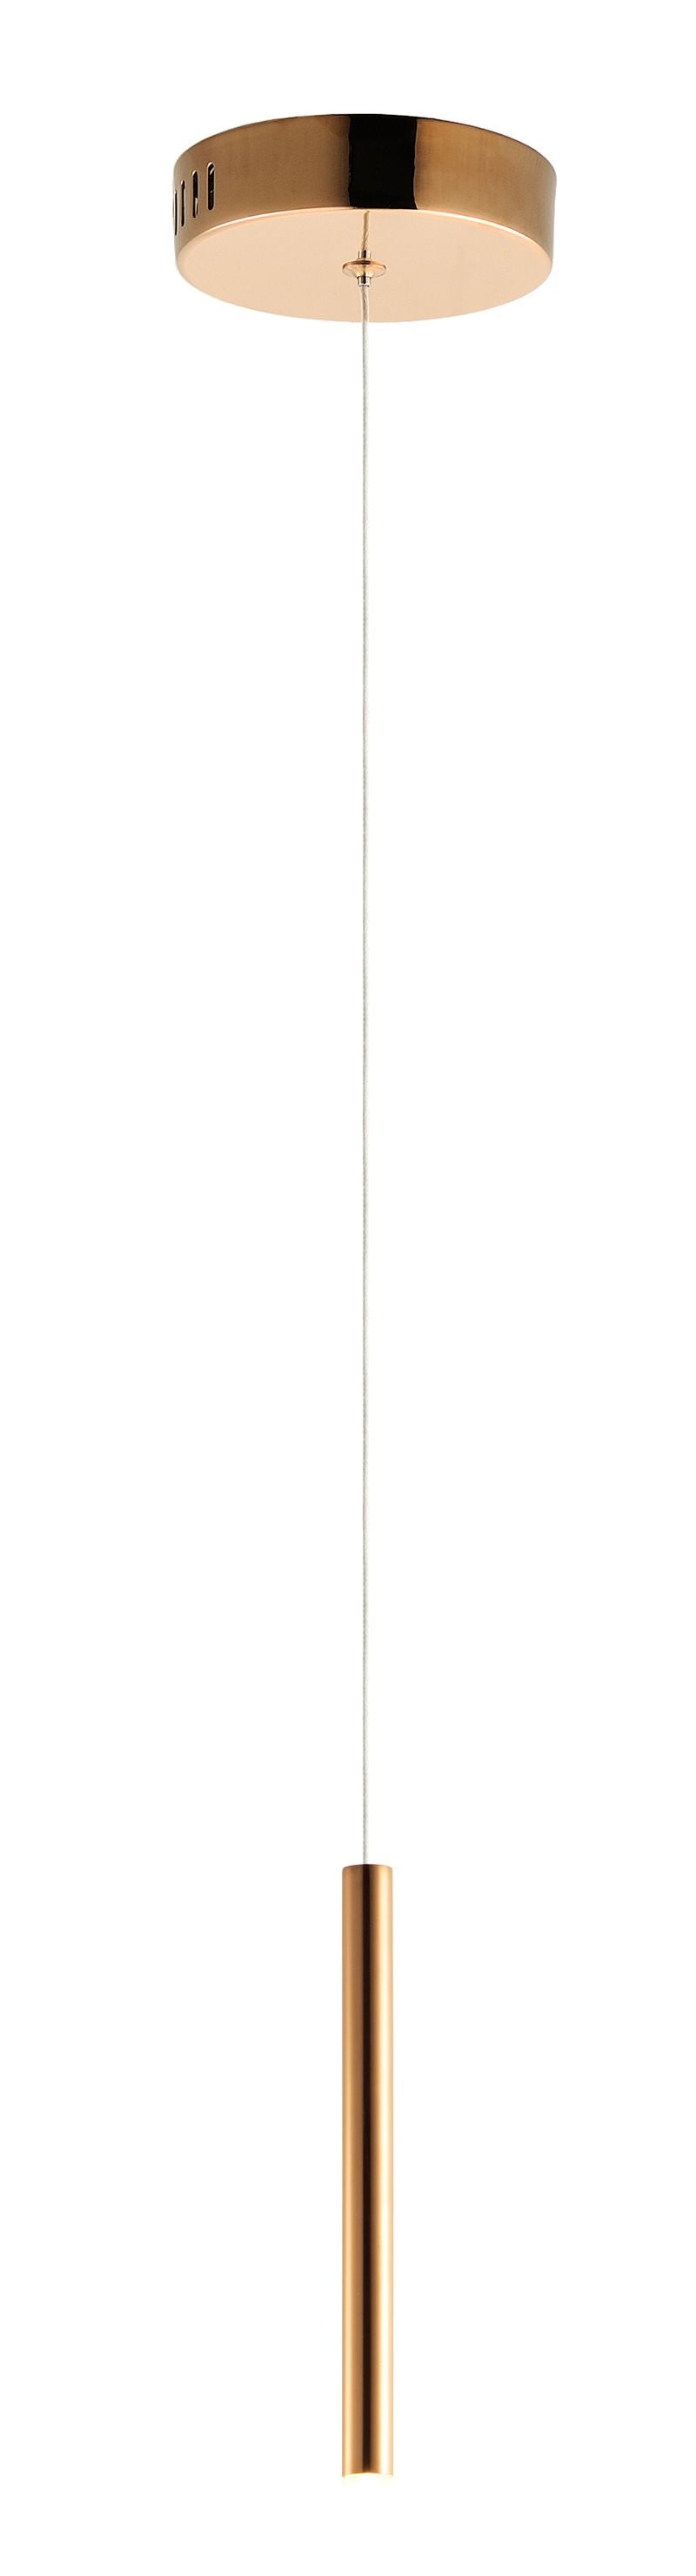 Flute 1' x 12' Single Light Mini-Pendant in Rose Gold